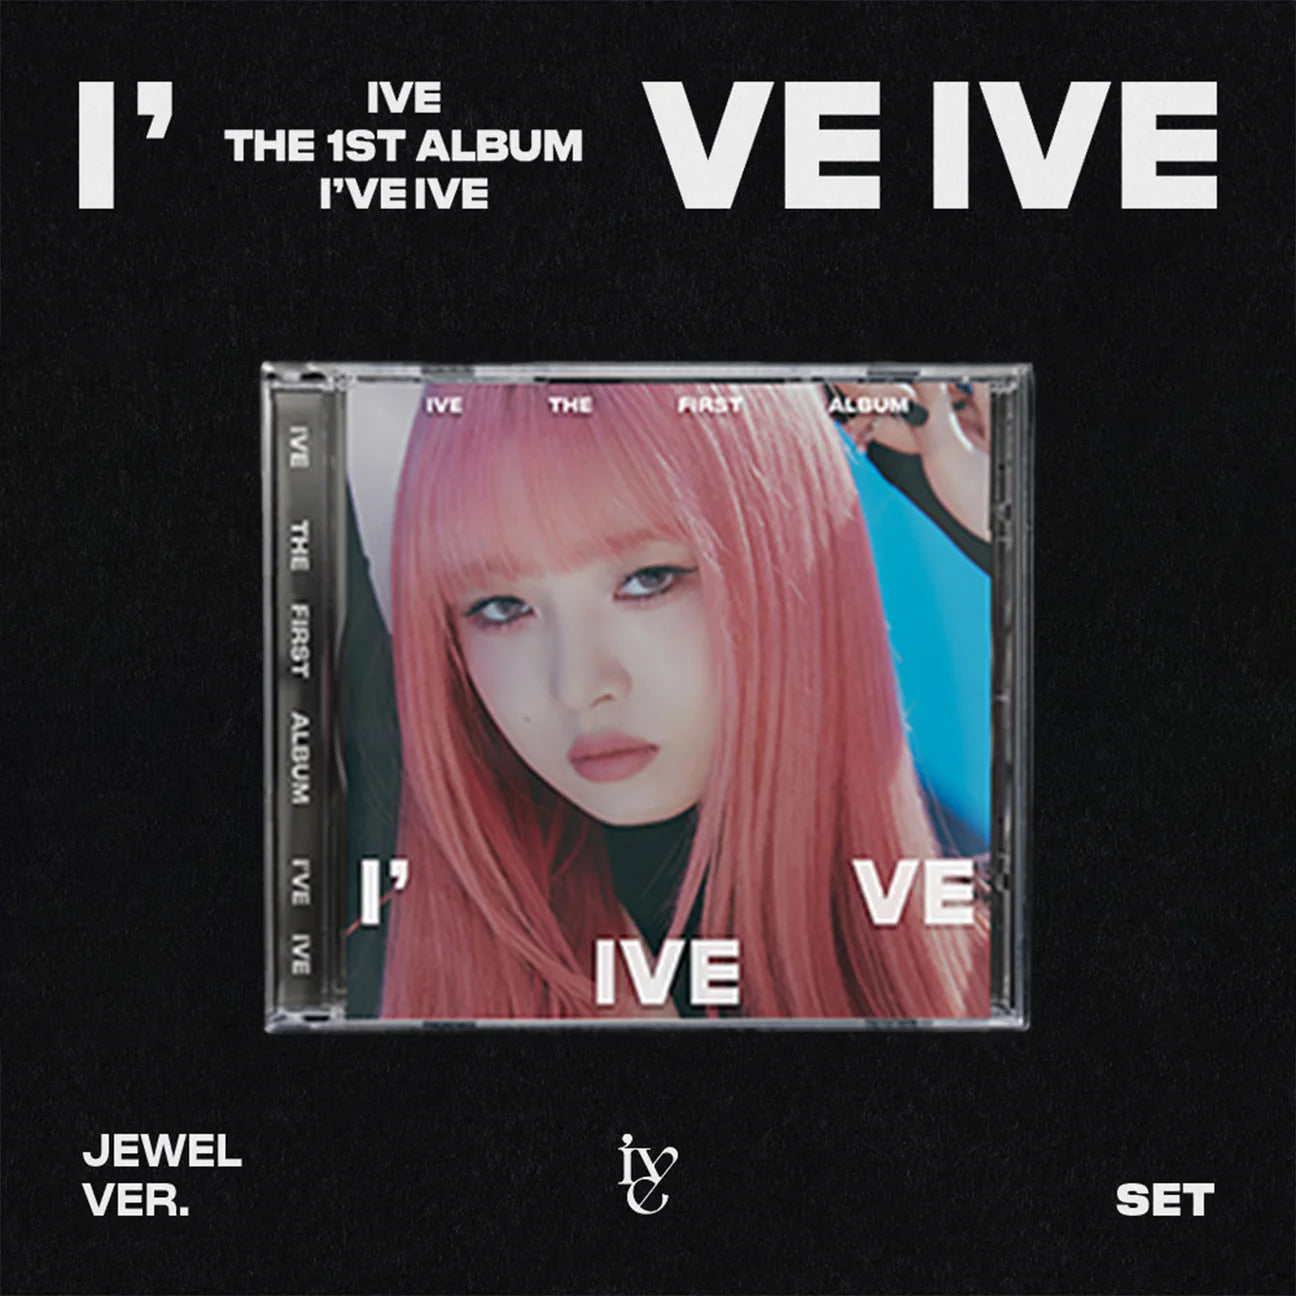 IVE - 1st Full Album 'I'VE IVE' (Jewel Version)